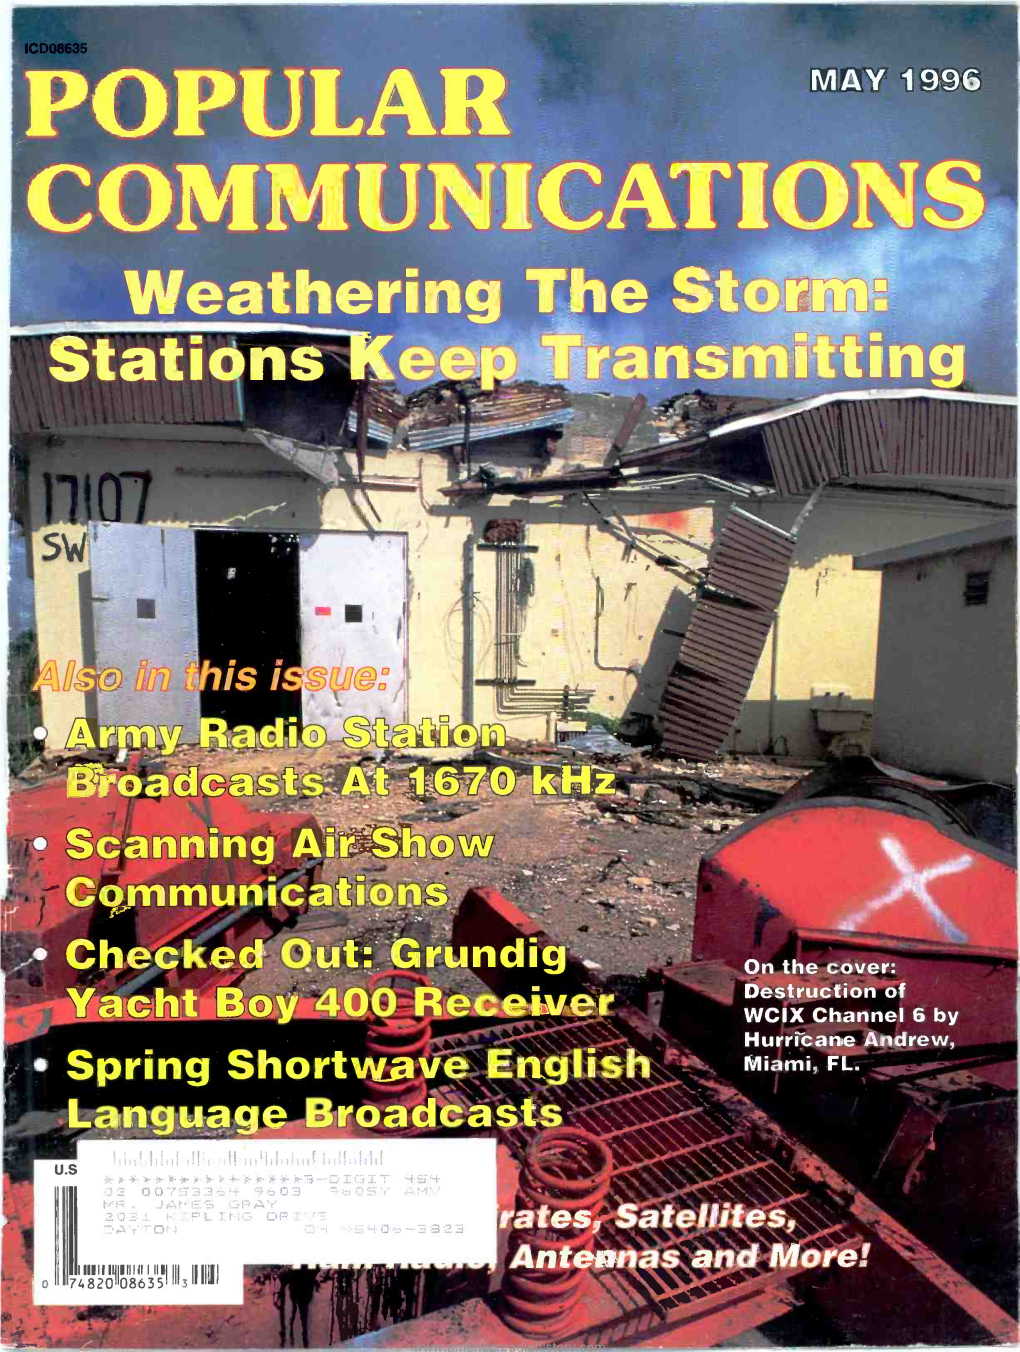 POPULAR COMMUNICATIONS Weathering the Storñl Stations Kee Ransmitting